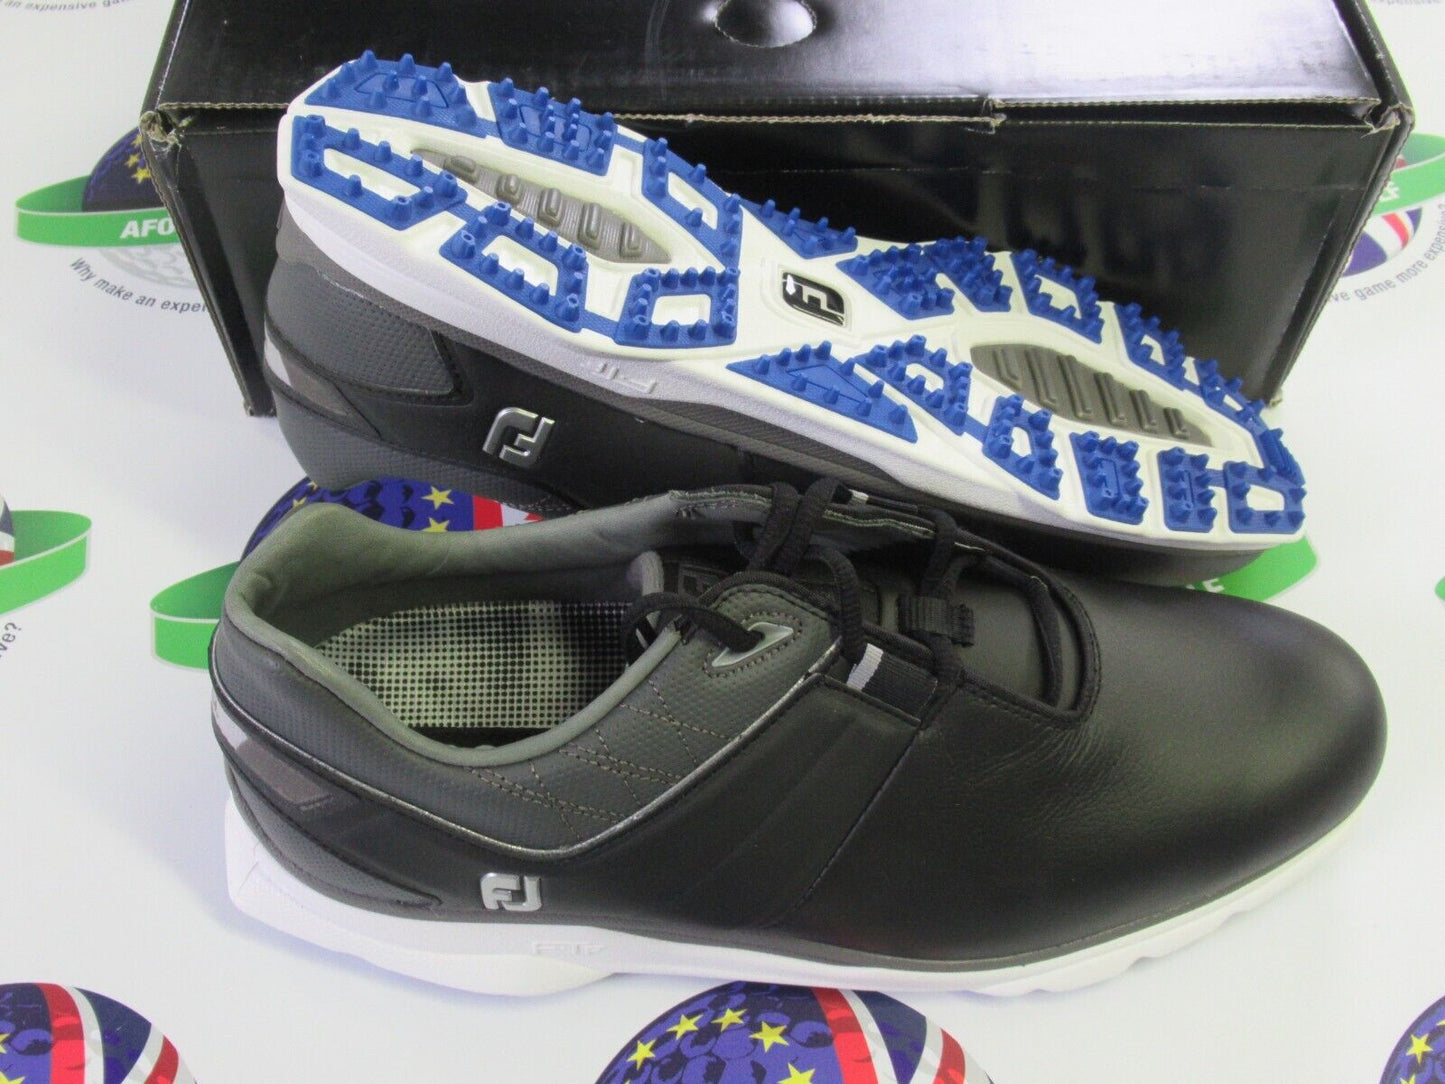 footjoy pro sl waterproof golf shoes black/grey 53077k uk size 8.5 medium